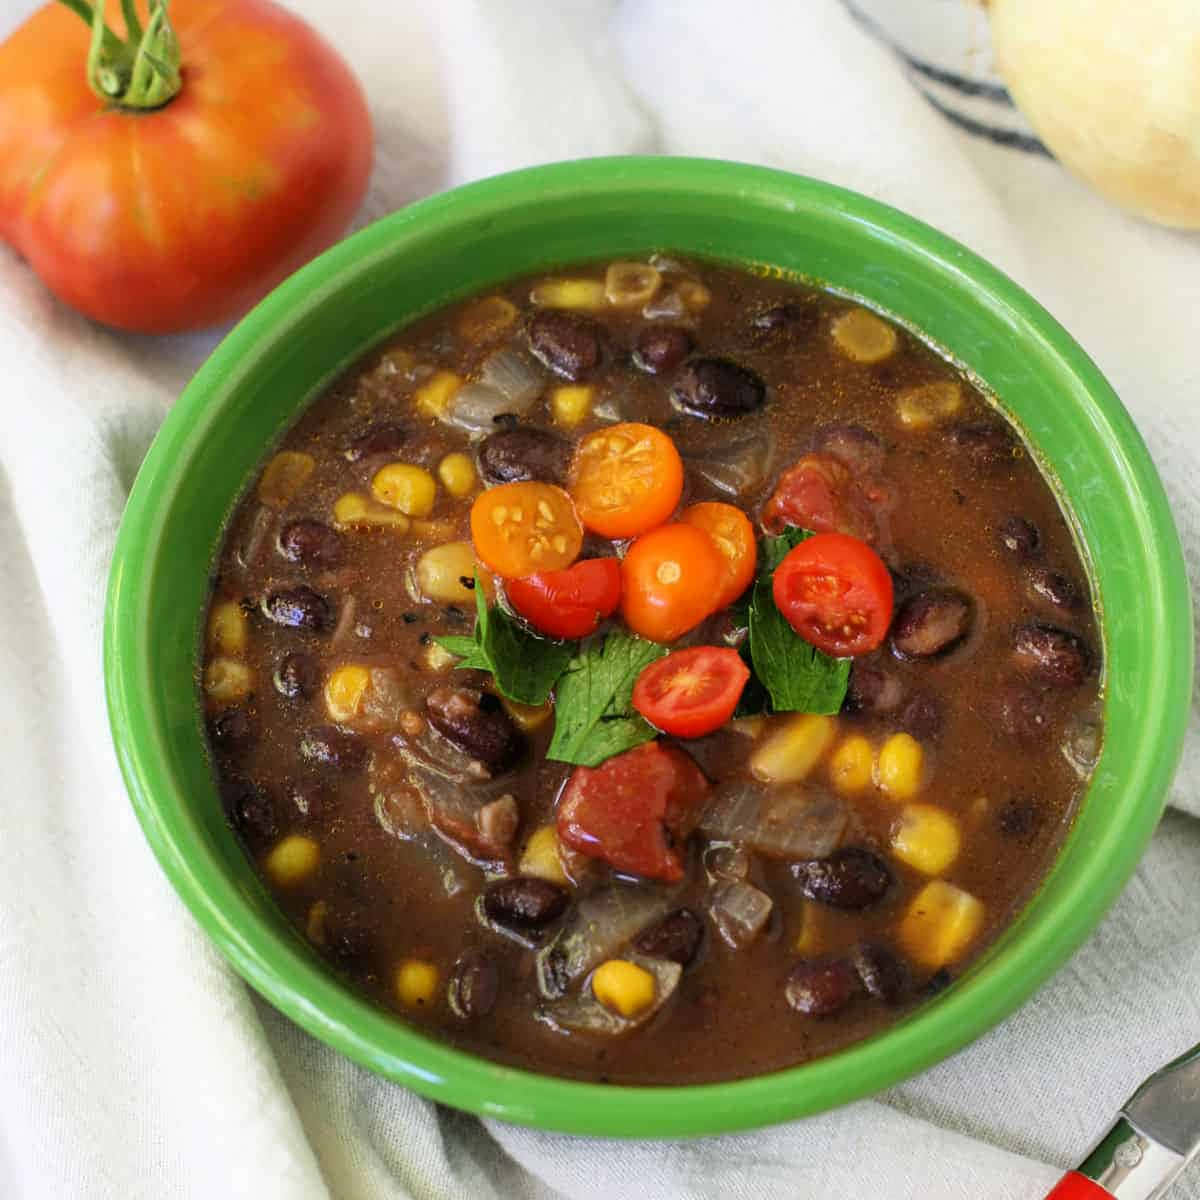 Enjoy a comforting bowl of black bean soup! Wallpaper